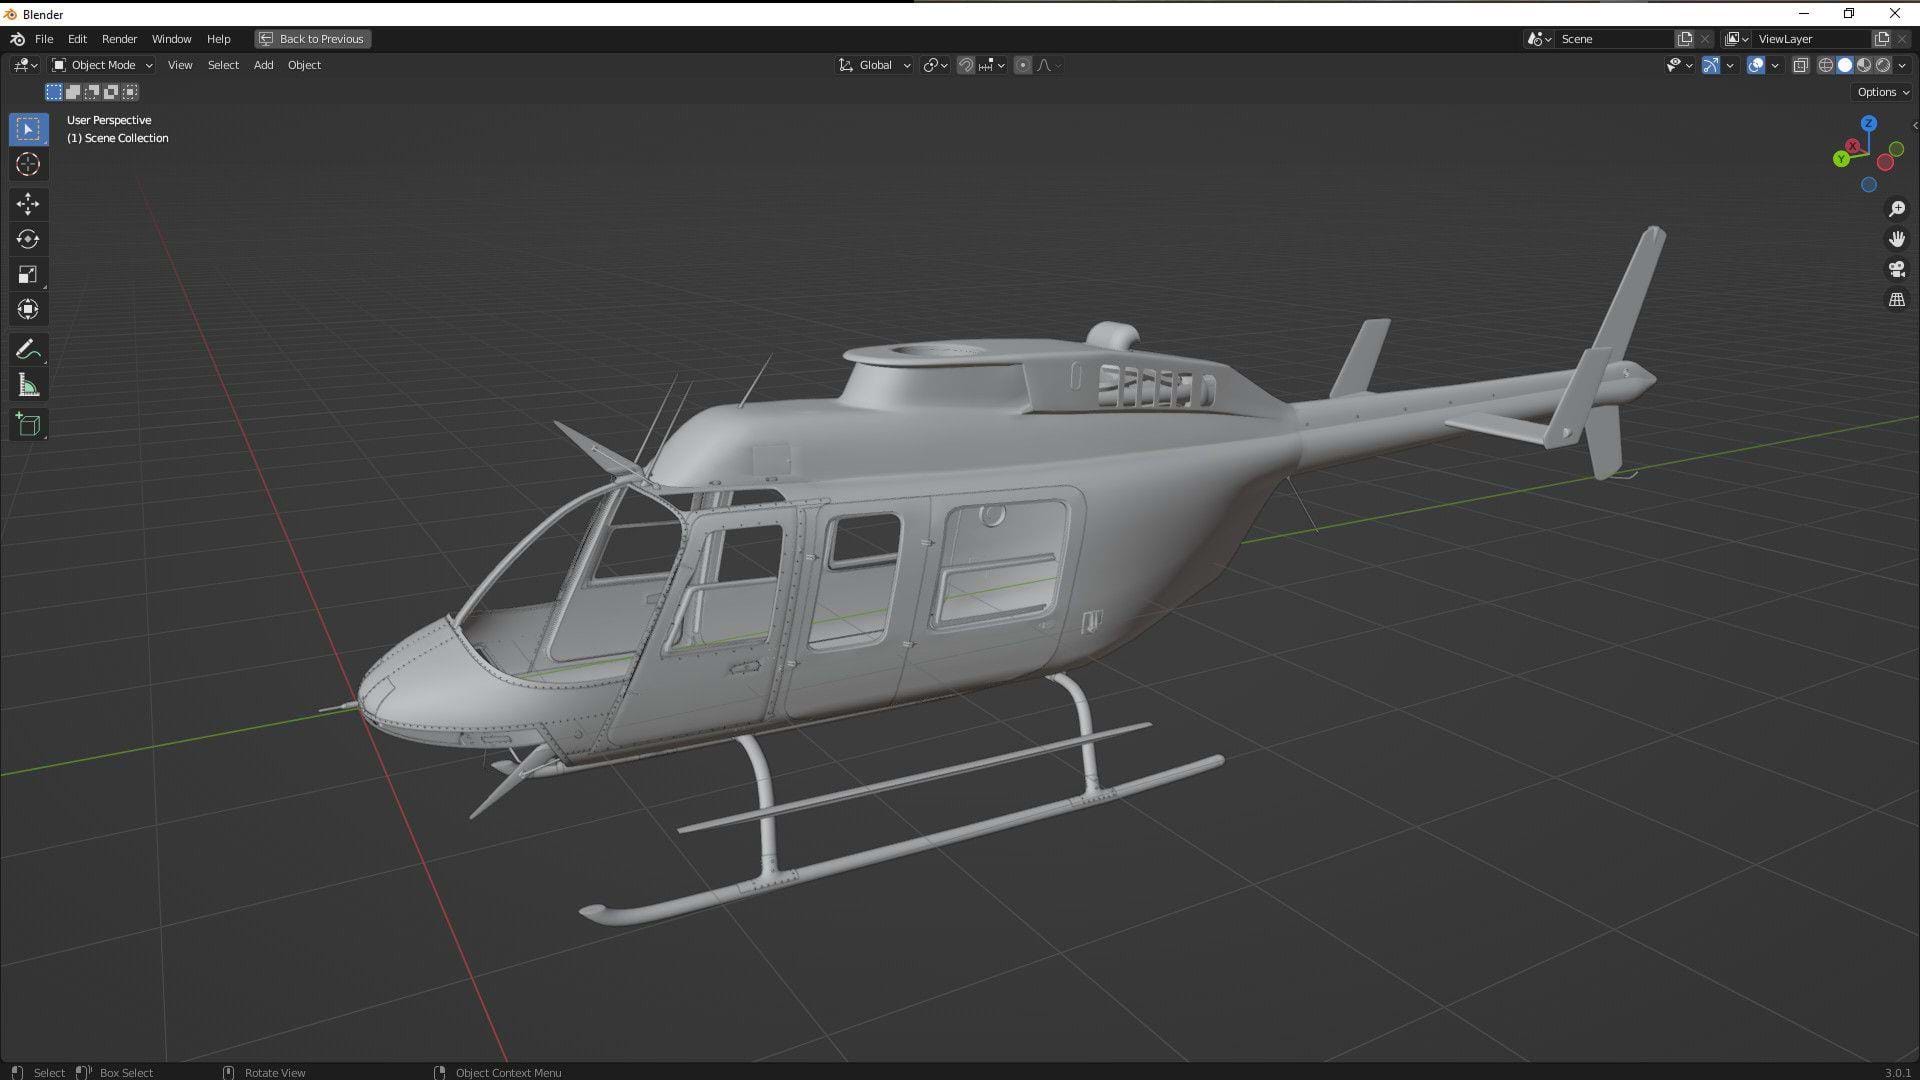 Bell 206L3 LongRanger for X-Plane under development by Cowan Simulation